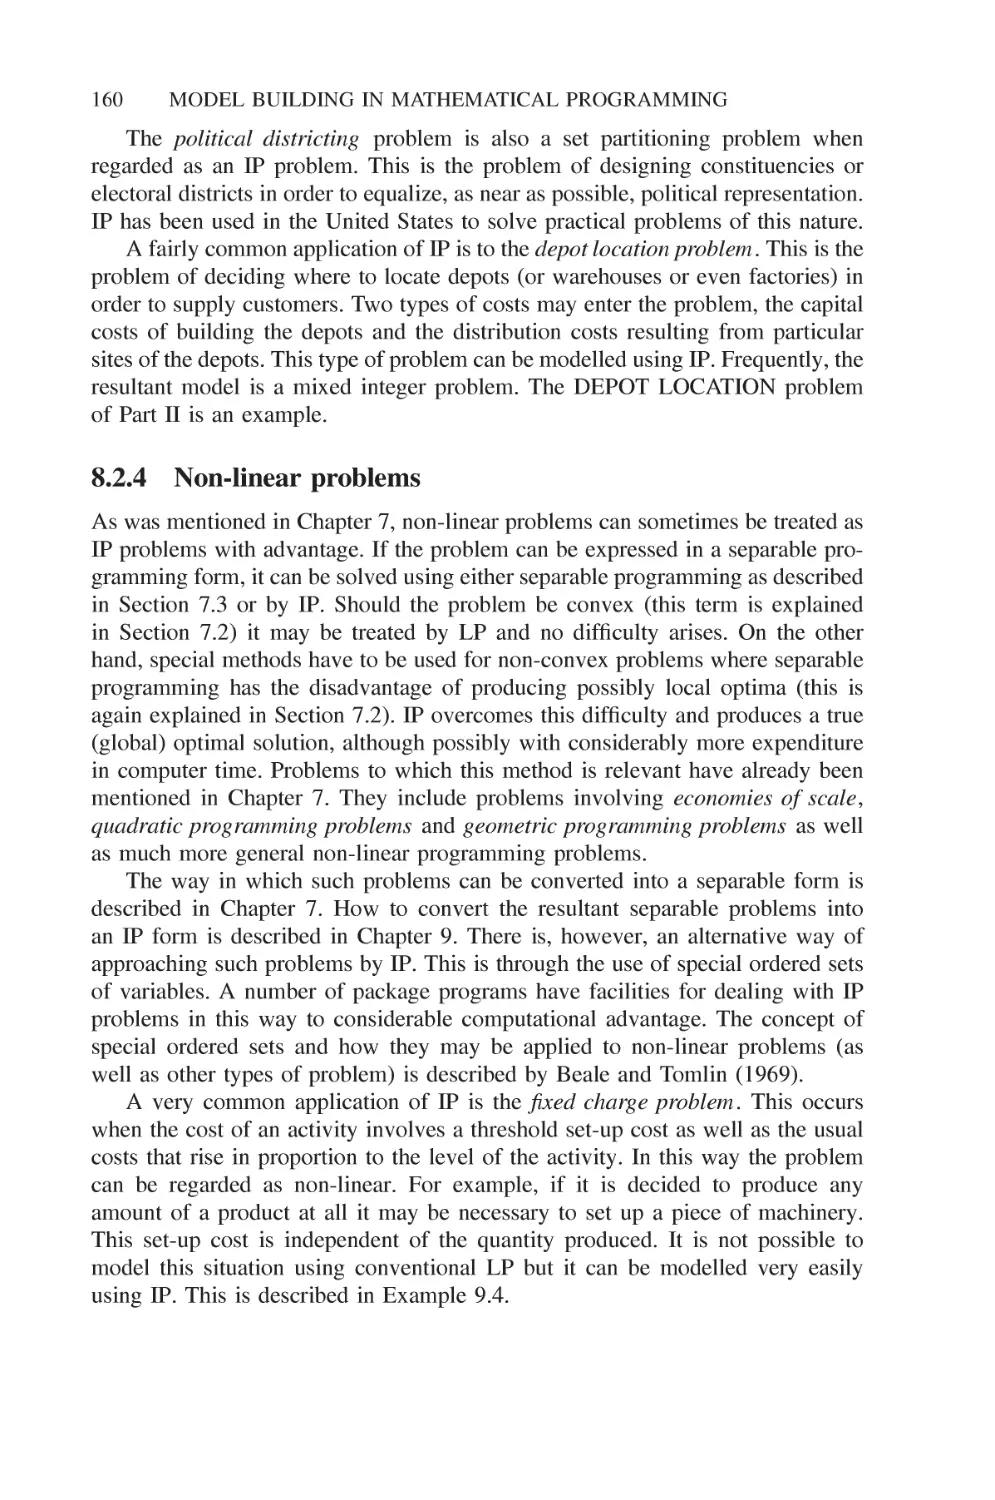 8.2.4 Non-linear problems